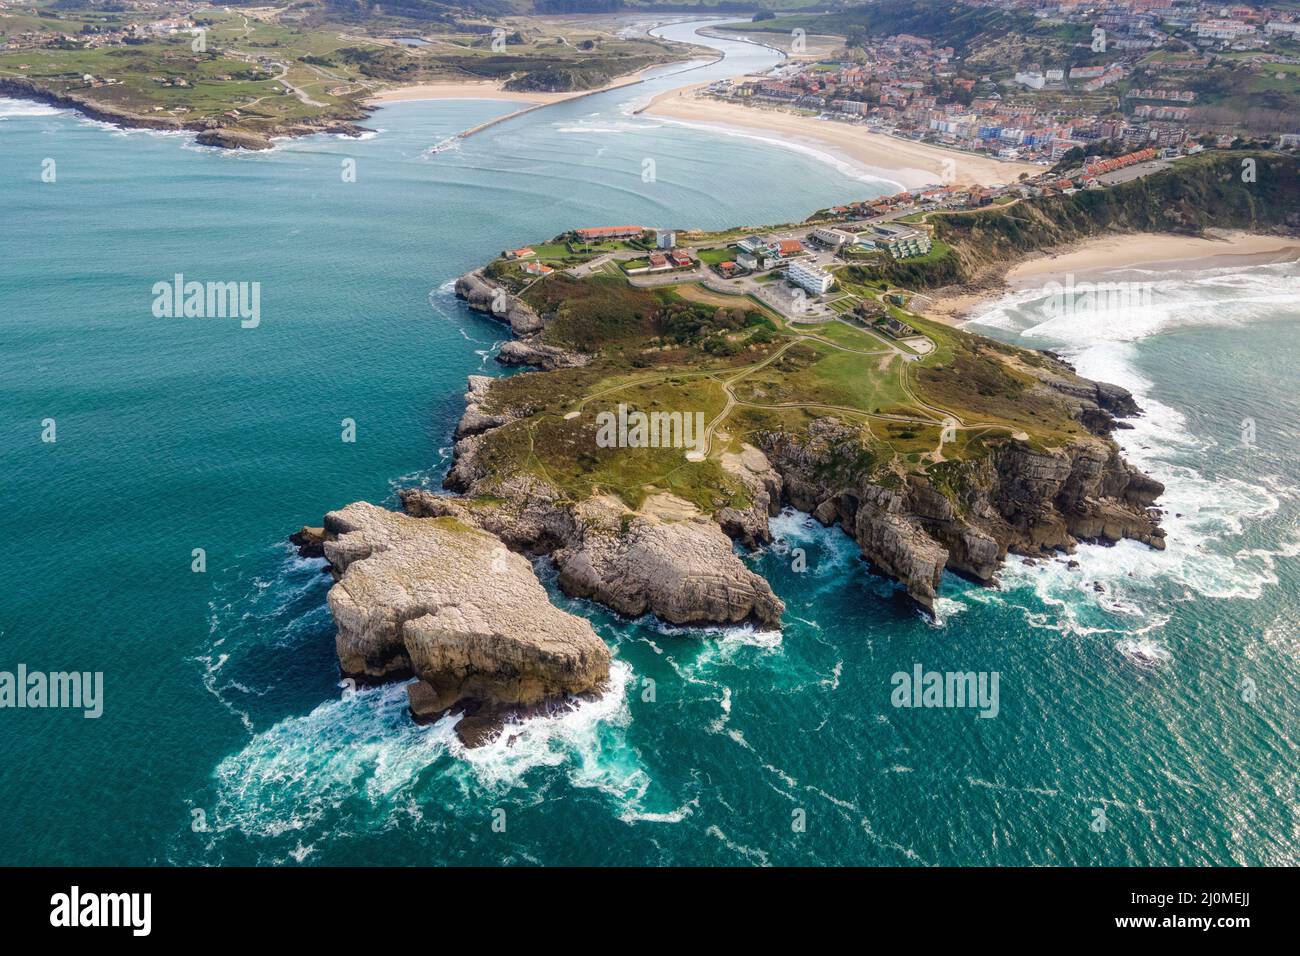 Aerial view of a scenic coastline landscape in Suances, Cantabria, Spain. Stock Photo